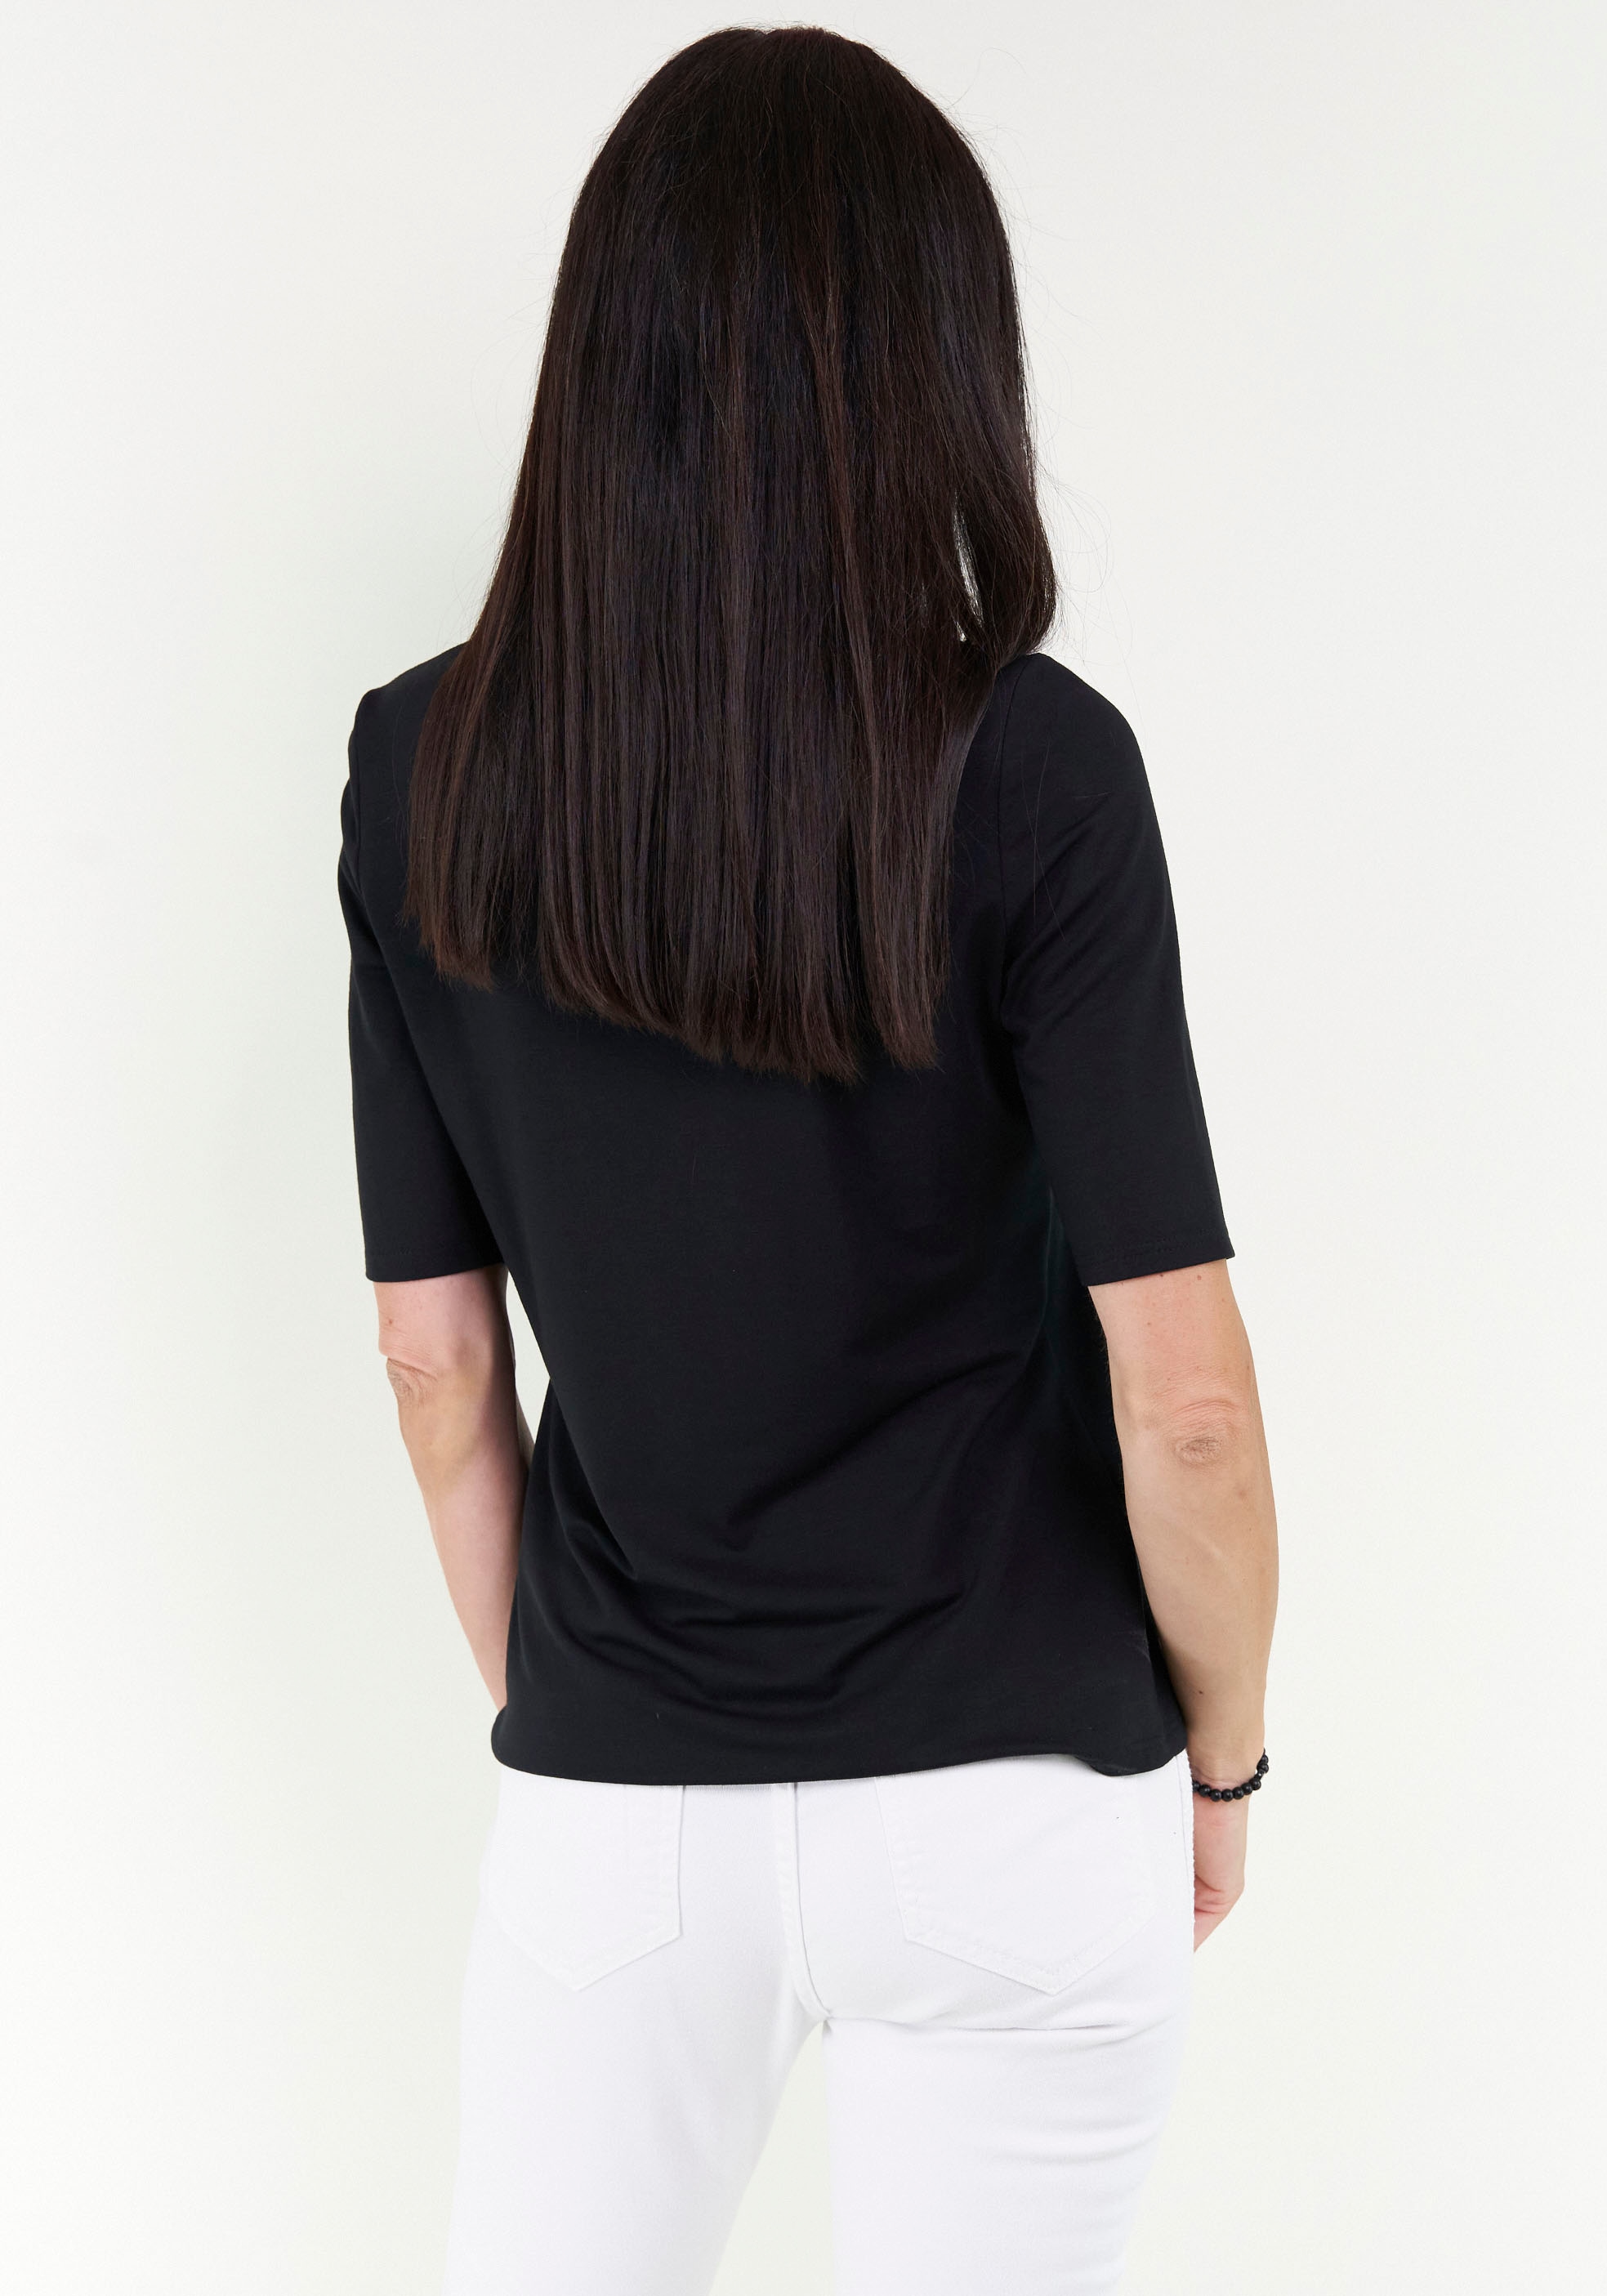 Seidel online Halbarm MADE bei GERMANY Moden mit softem Material, IN V-Shirt, aus